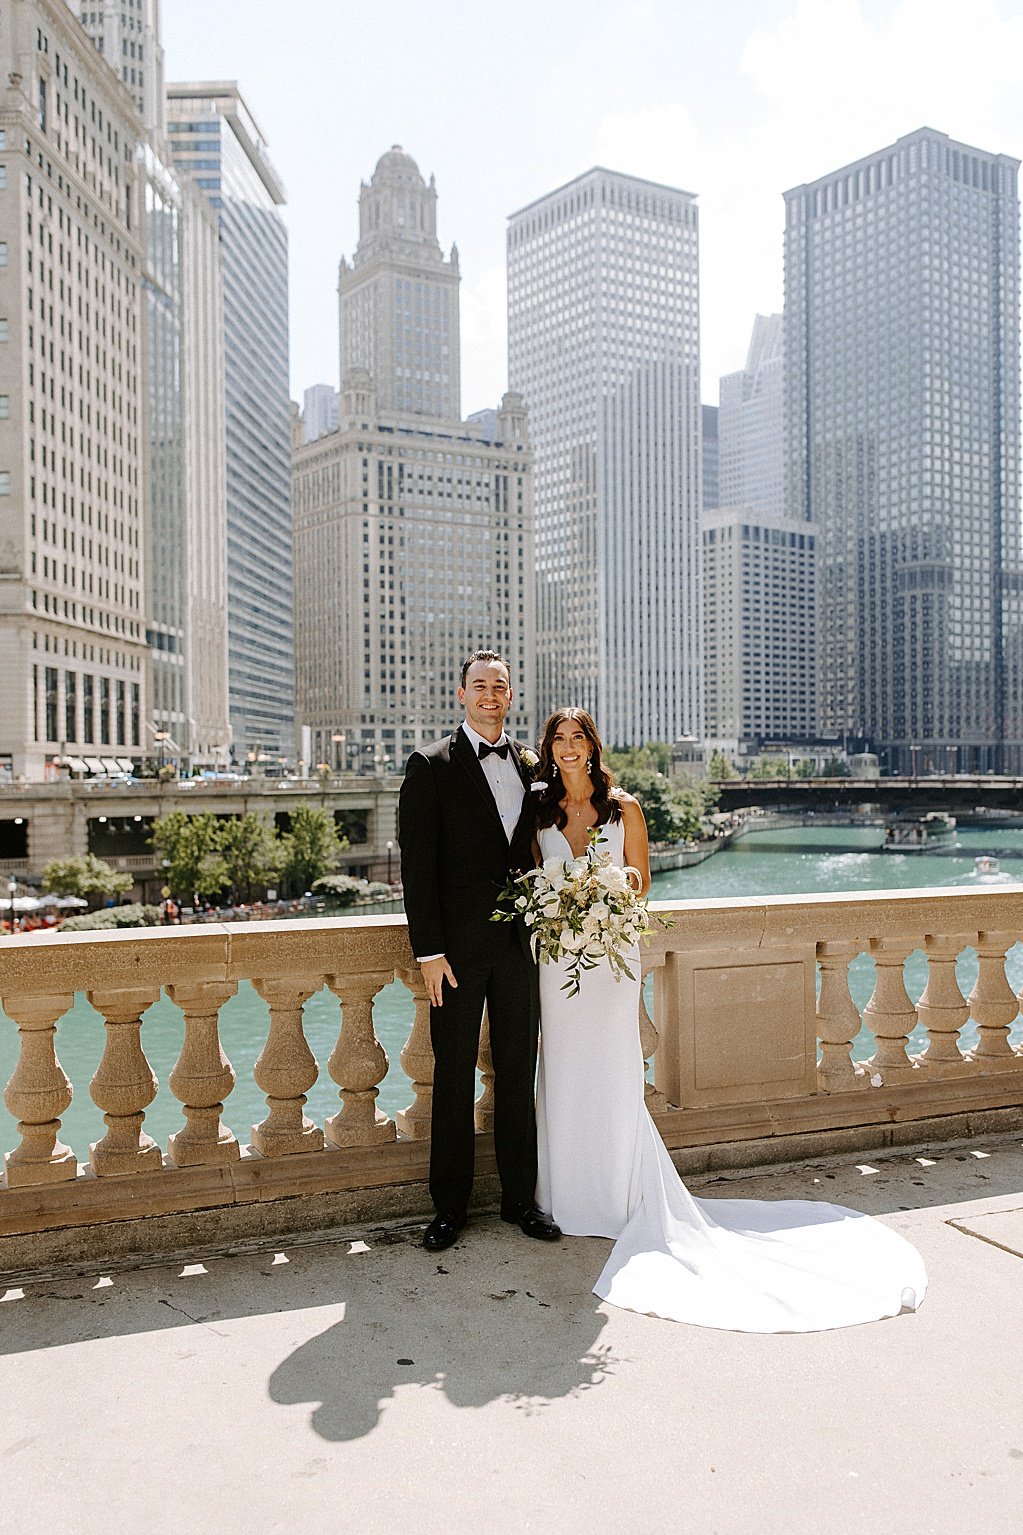 The Geraghty Chicago Wedding Venue, The Geraghty hotel chicago, Chicago wedding venues, high class chicago wedding venue, top chicago wedding venues, chicago wedding photographer